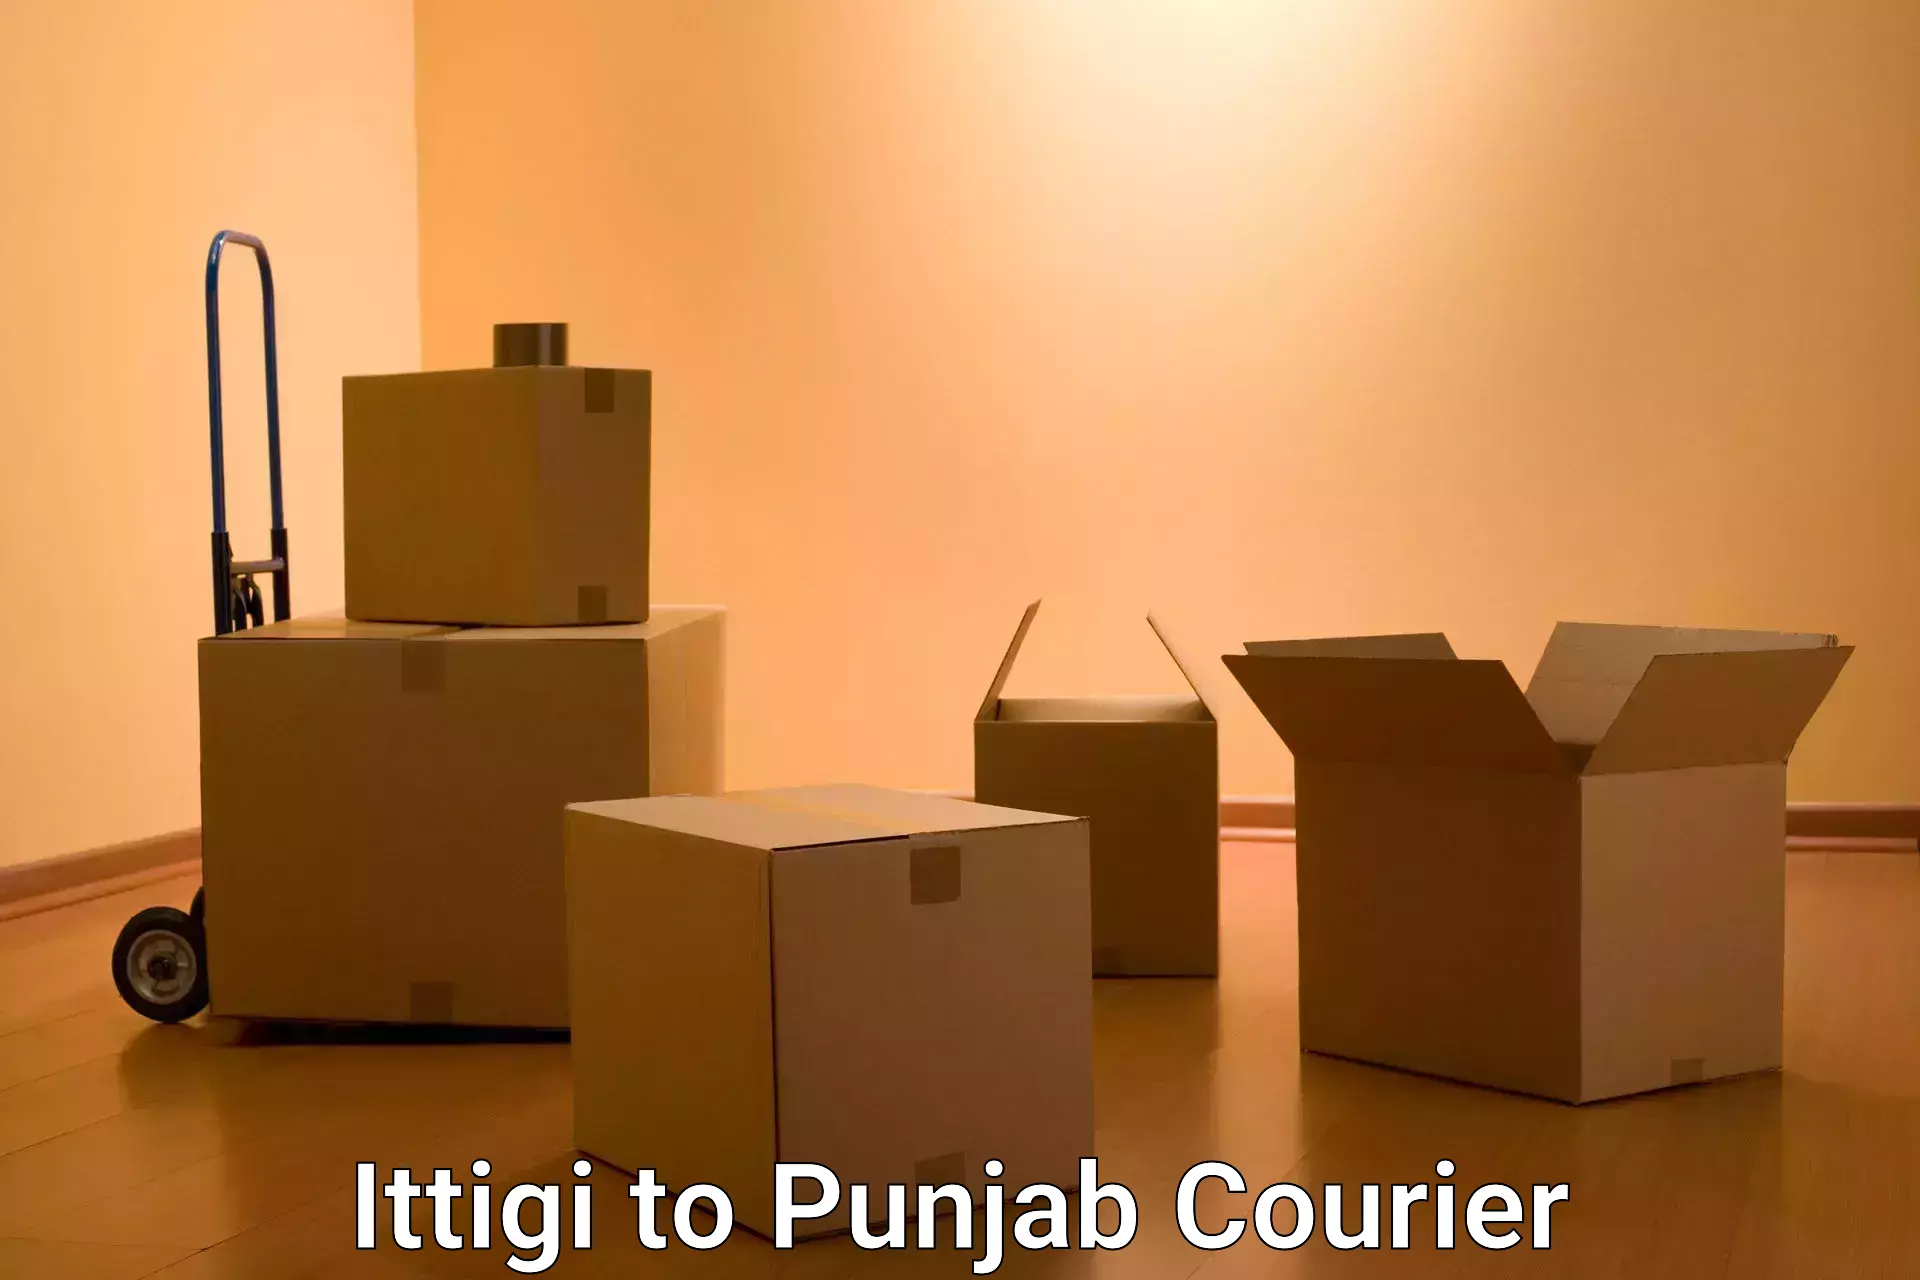 Cash on delivery service Ittigi to Punjab